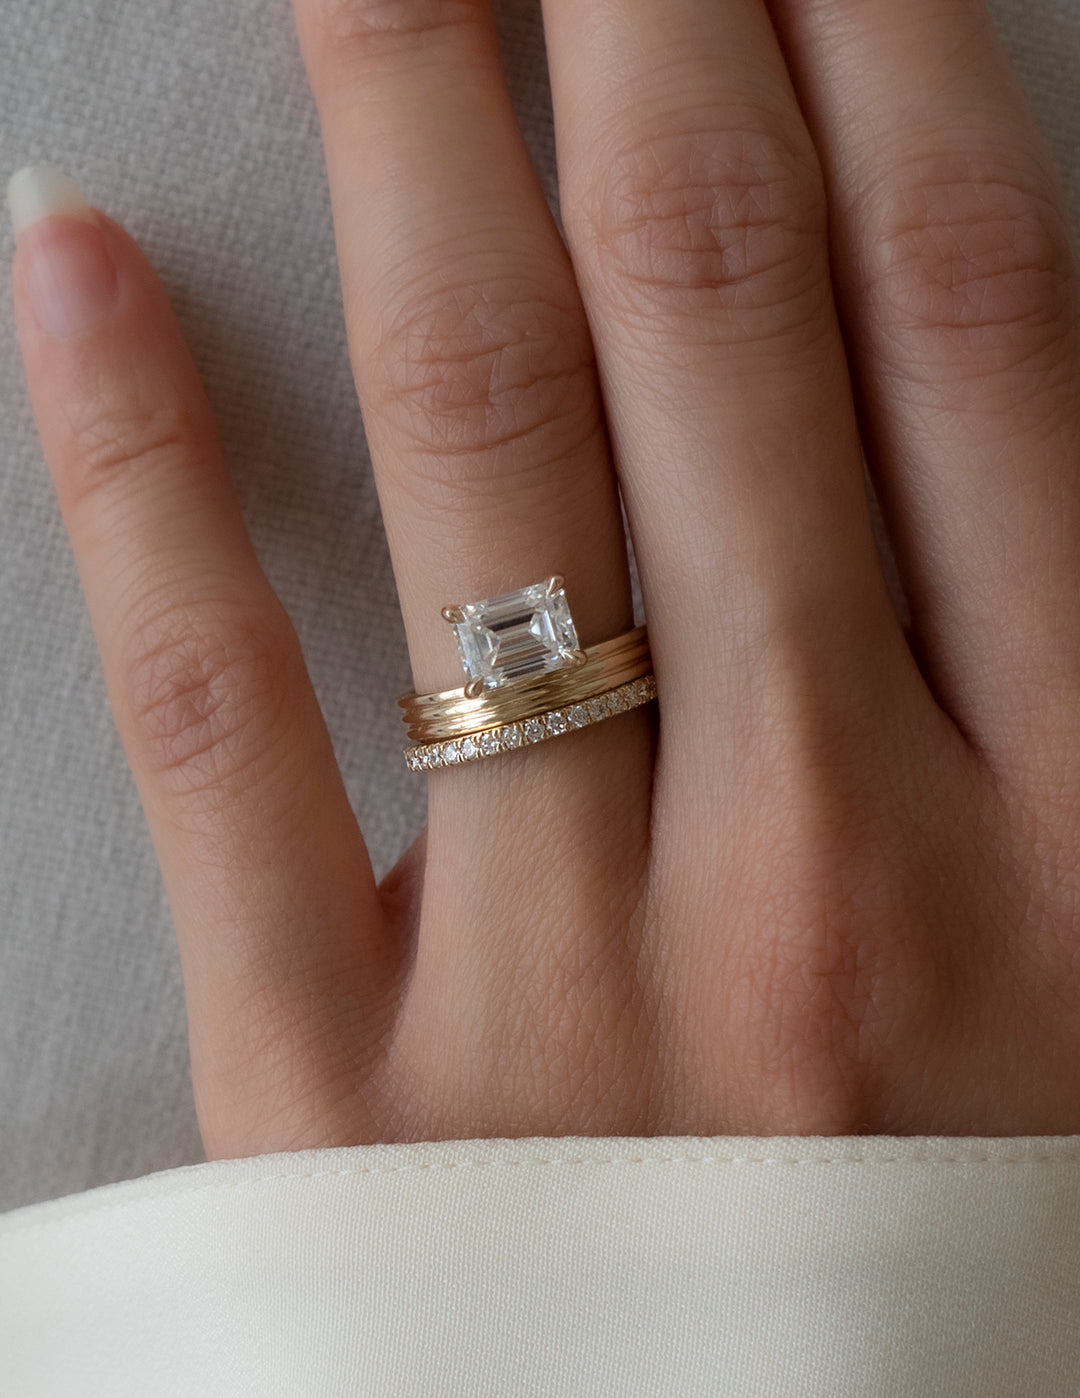 Cadette Niwa Emerald nature inspired engagement ring. Unique simple bold engagement ring. Unique japanese inspired engagement ring.